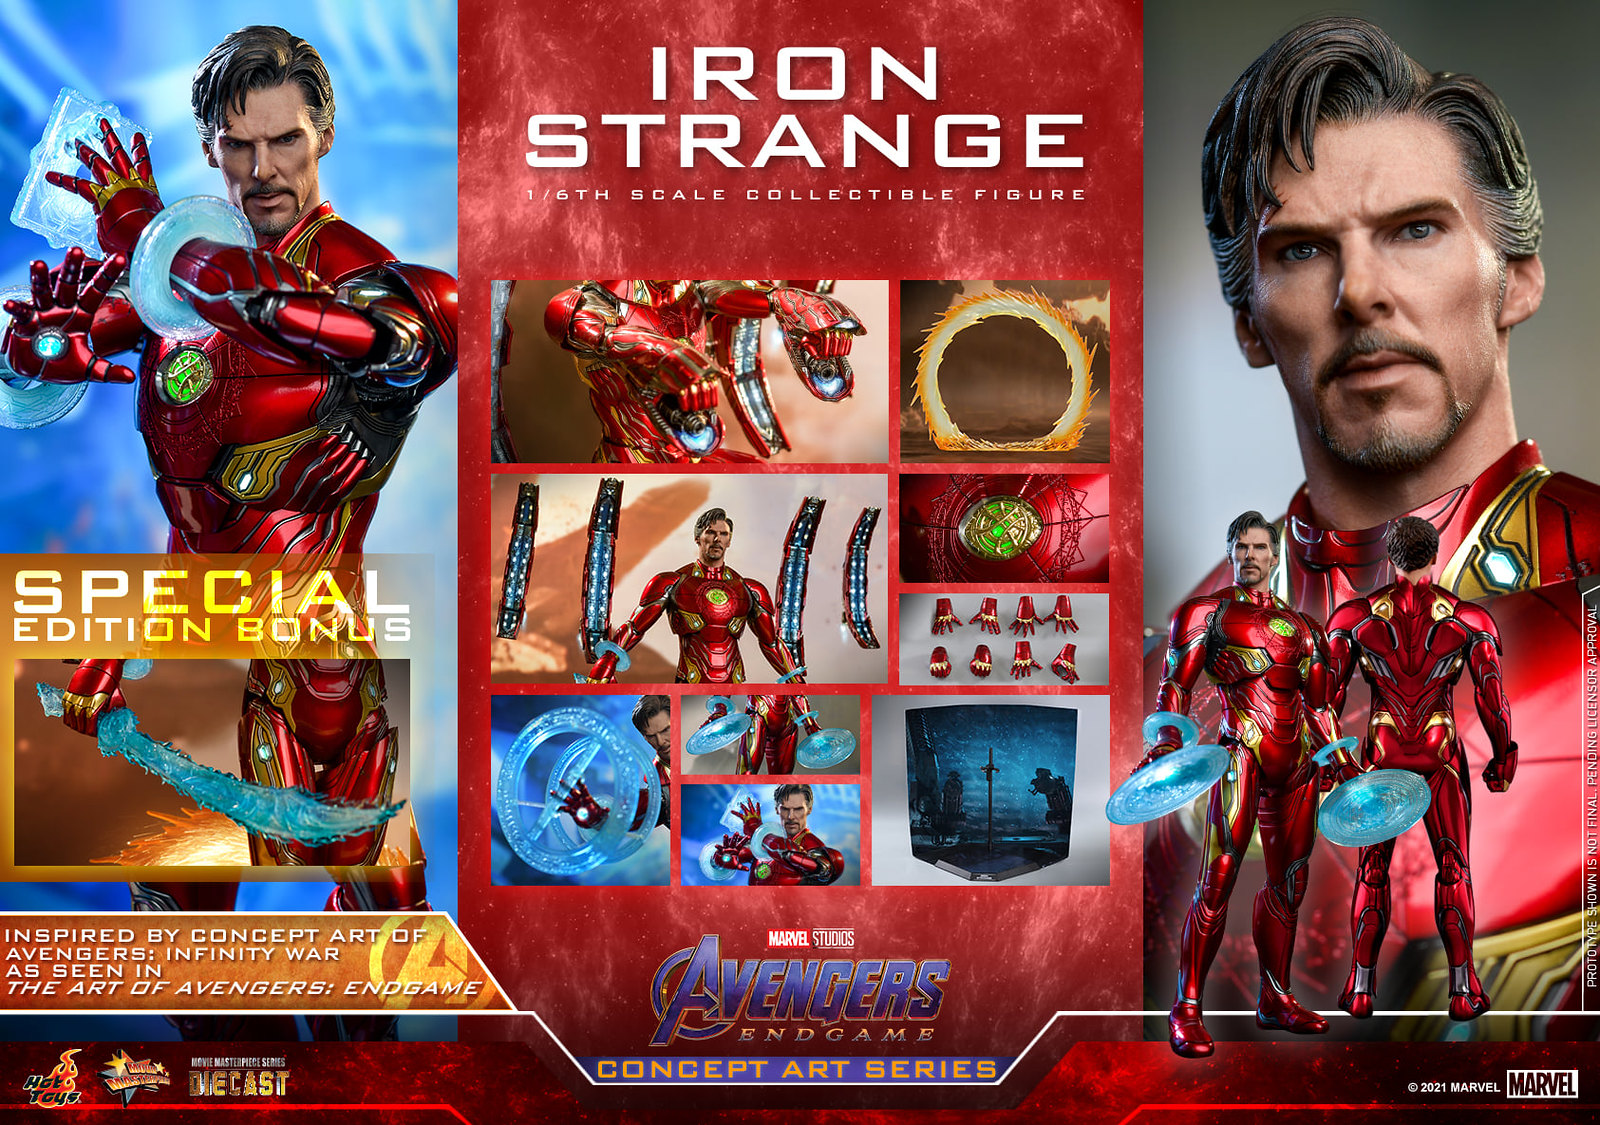 NEW PRODUCT: Hot Toys Avengers: Endgame (Concept Art Series) - 1/6th scale Iron Strange Collectible Figure 51312230305_60a7e2f7e3_h